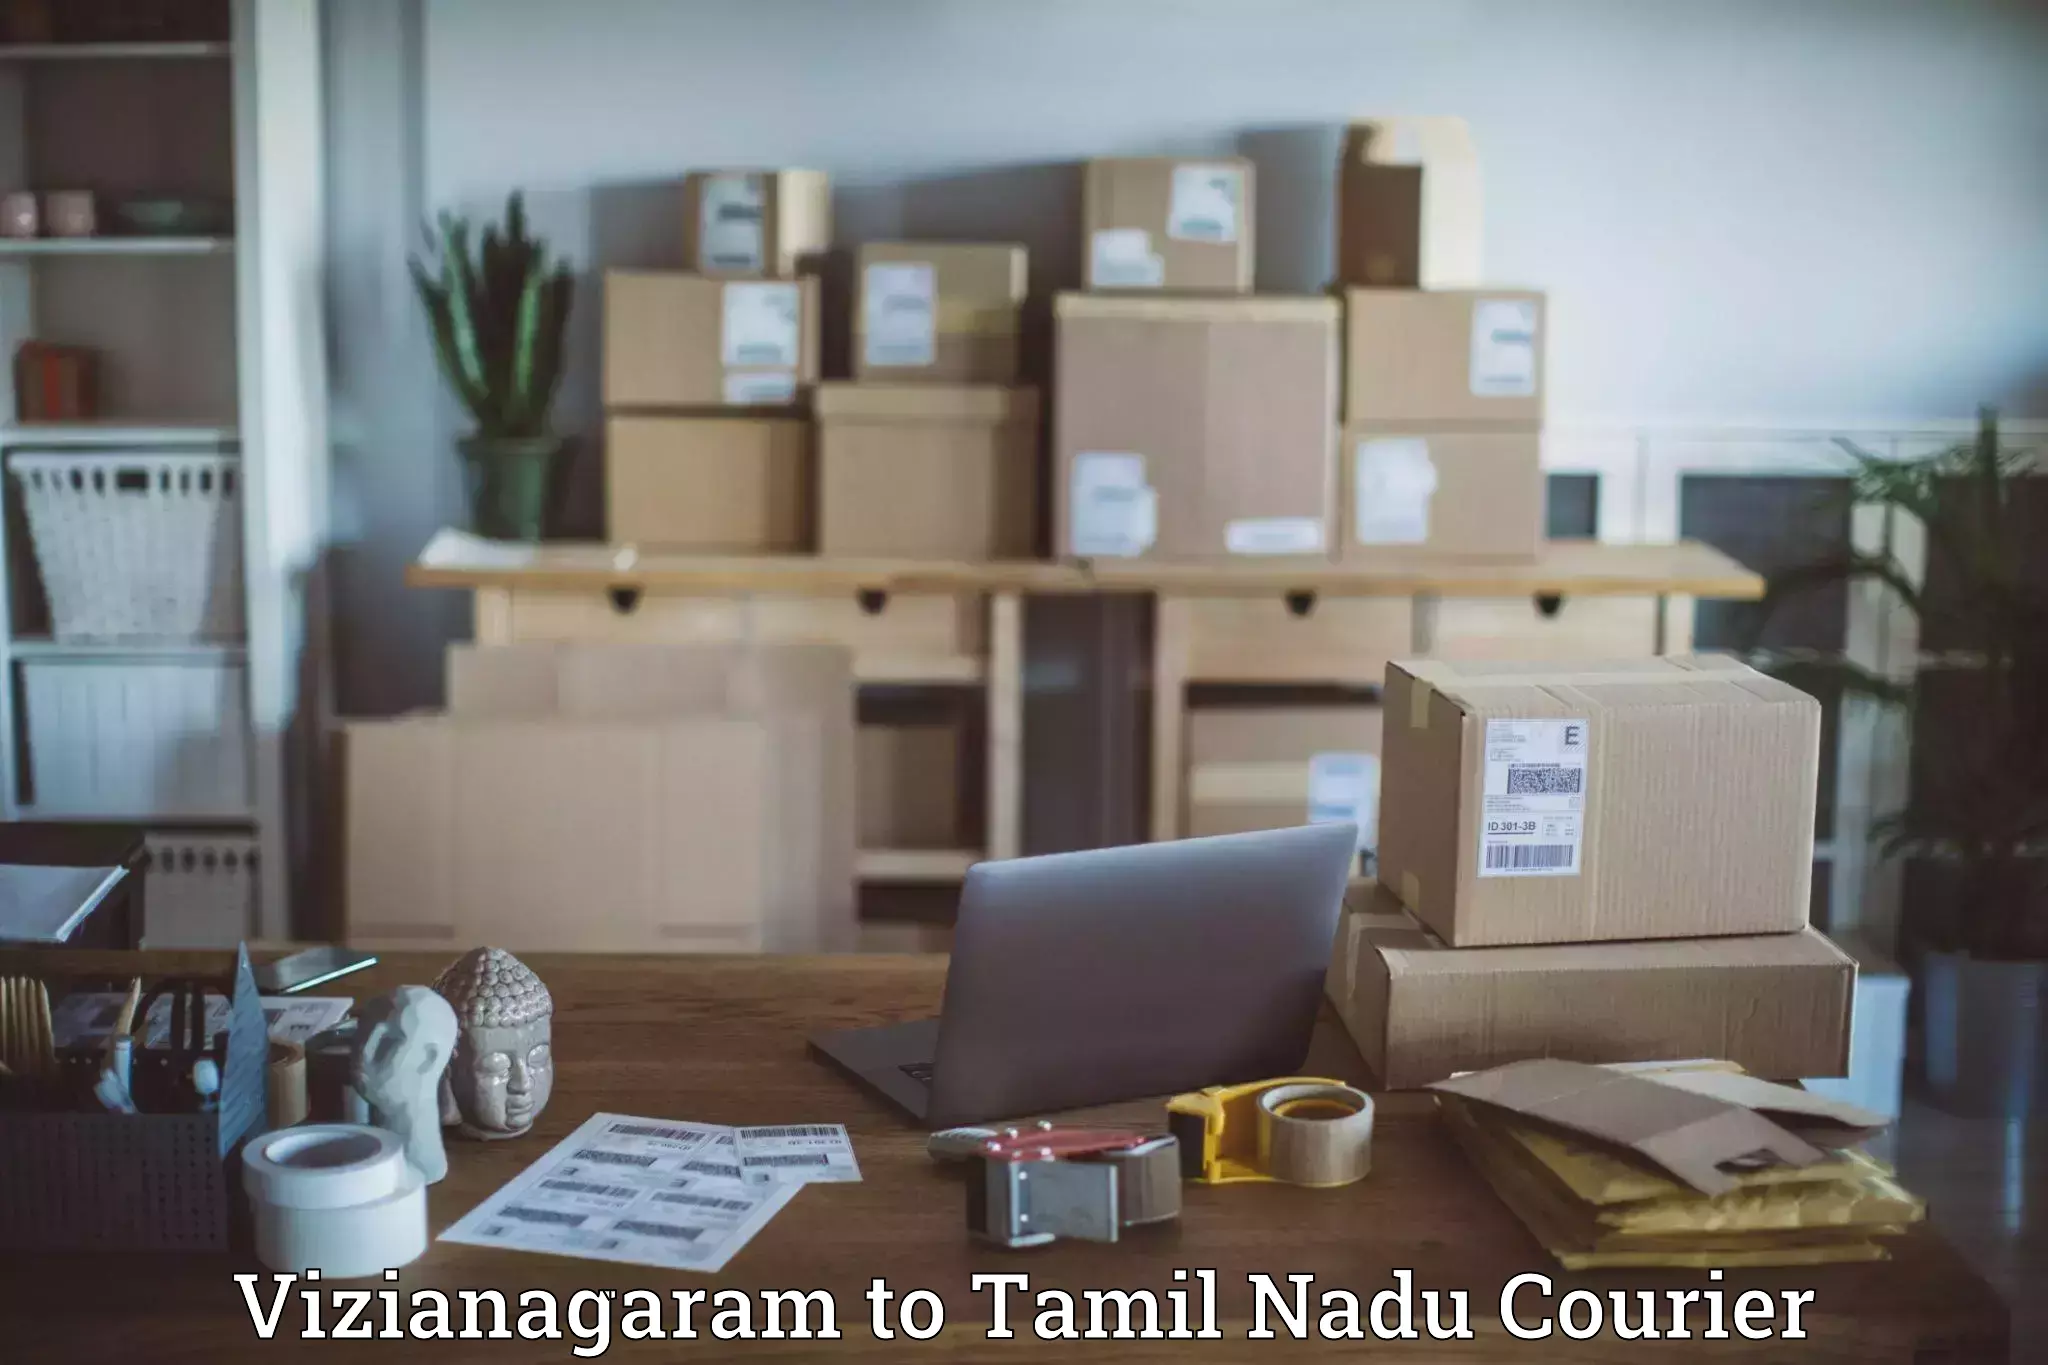 User-friendly delivery service Vizianagaram to Tamil Nadu